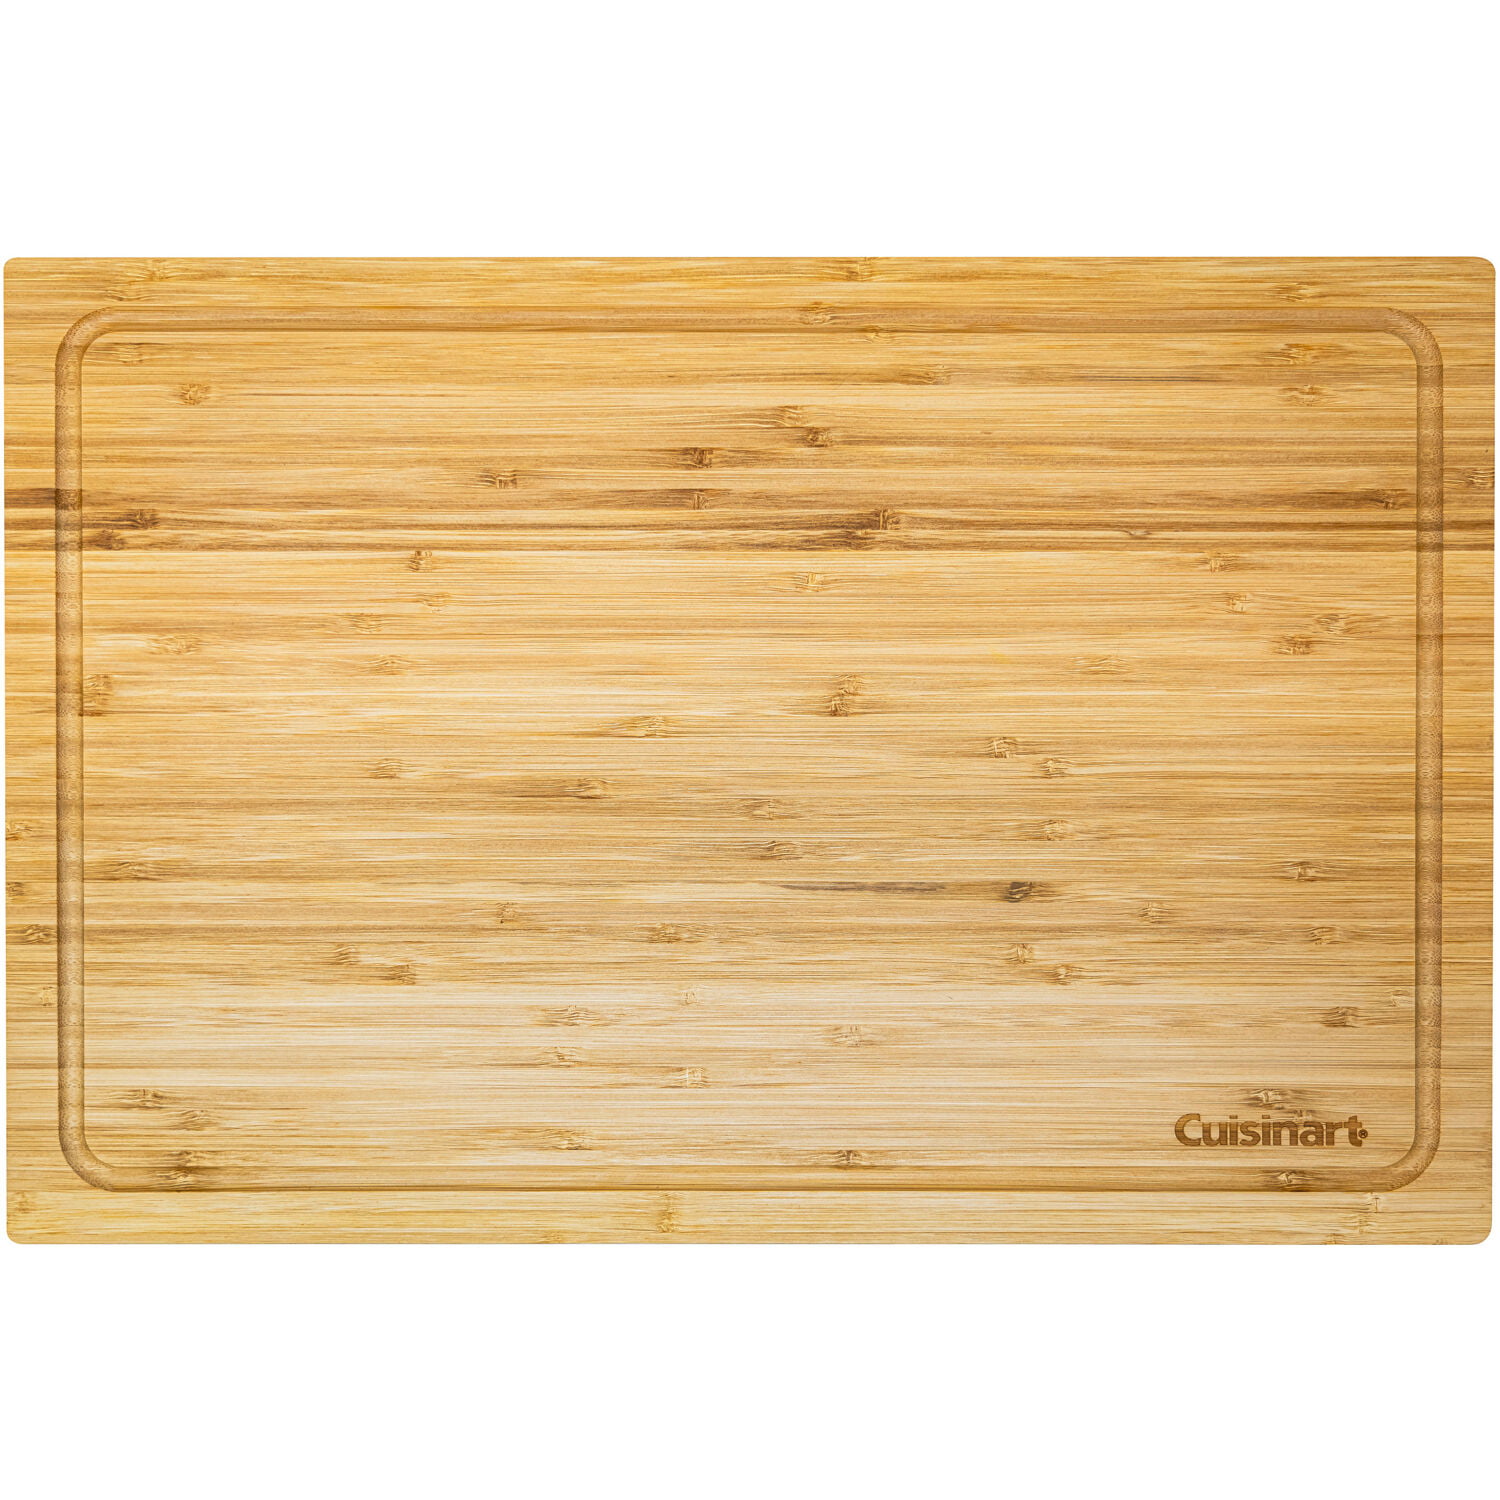 Promotional Cuisinart 14 Bamboo Cutting Board $15.24